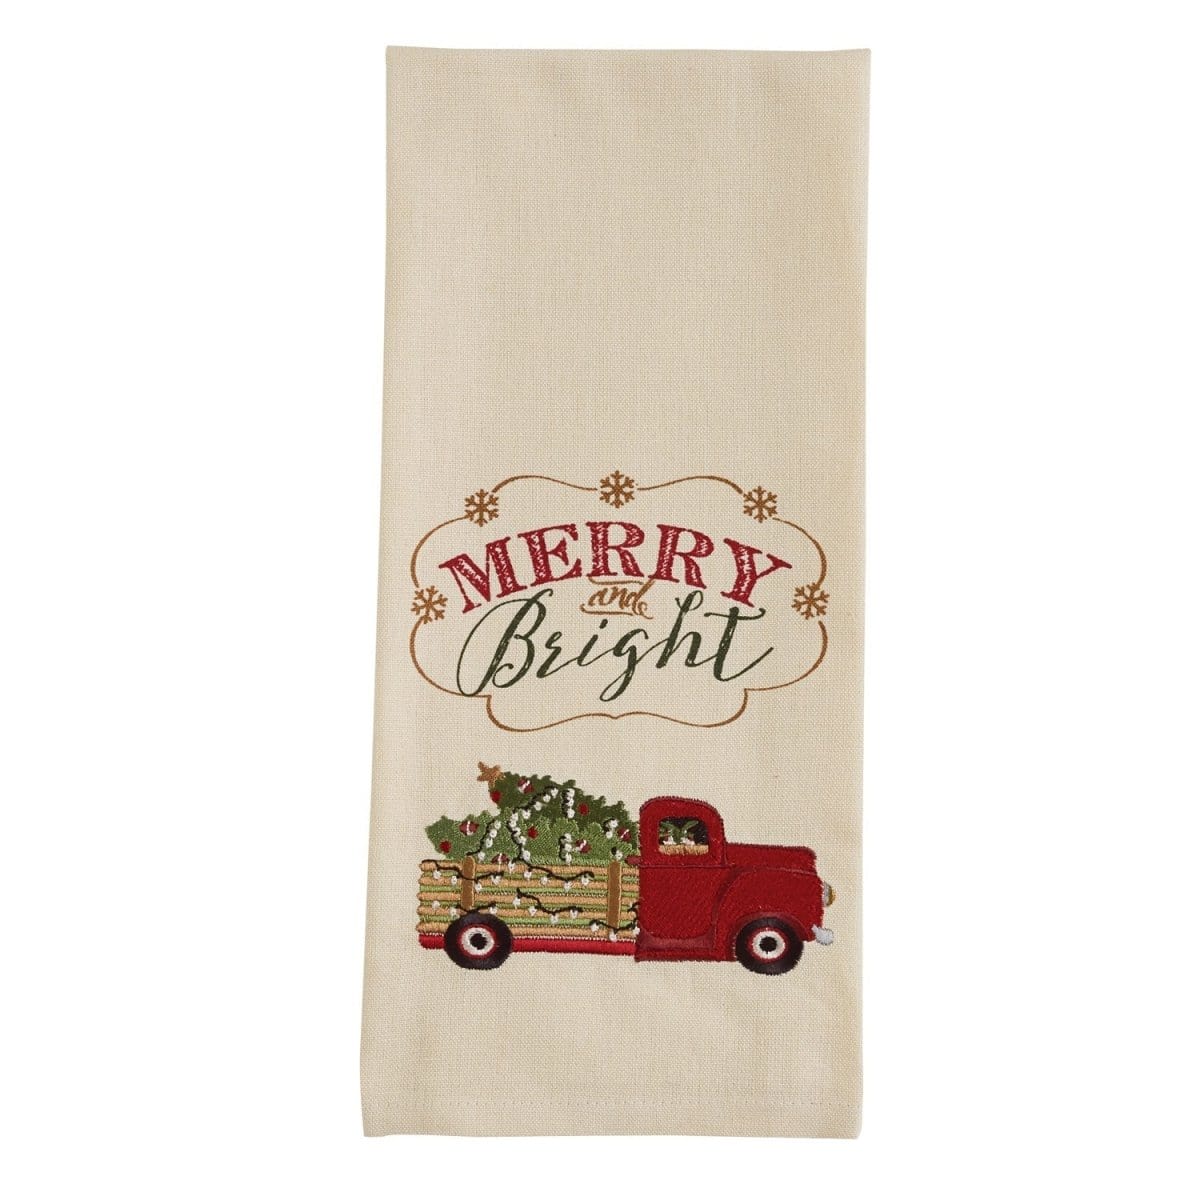 Merry and bright Decorative Towel-Park Designs-The Village Merchant